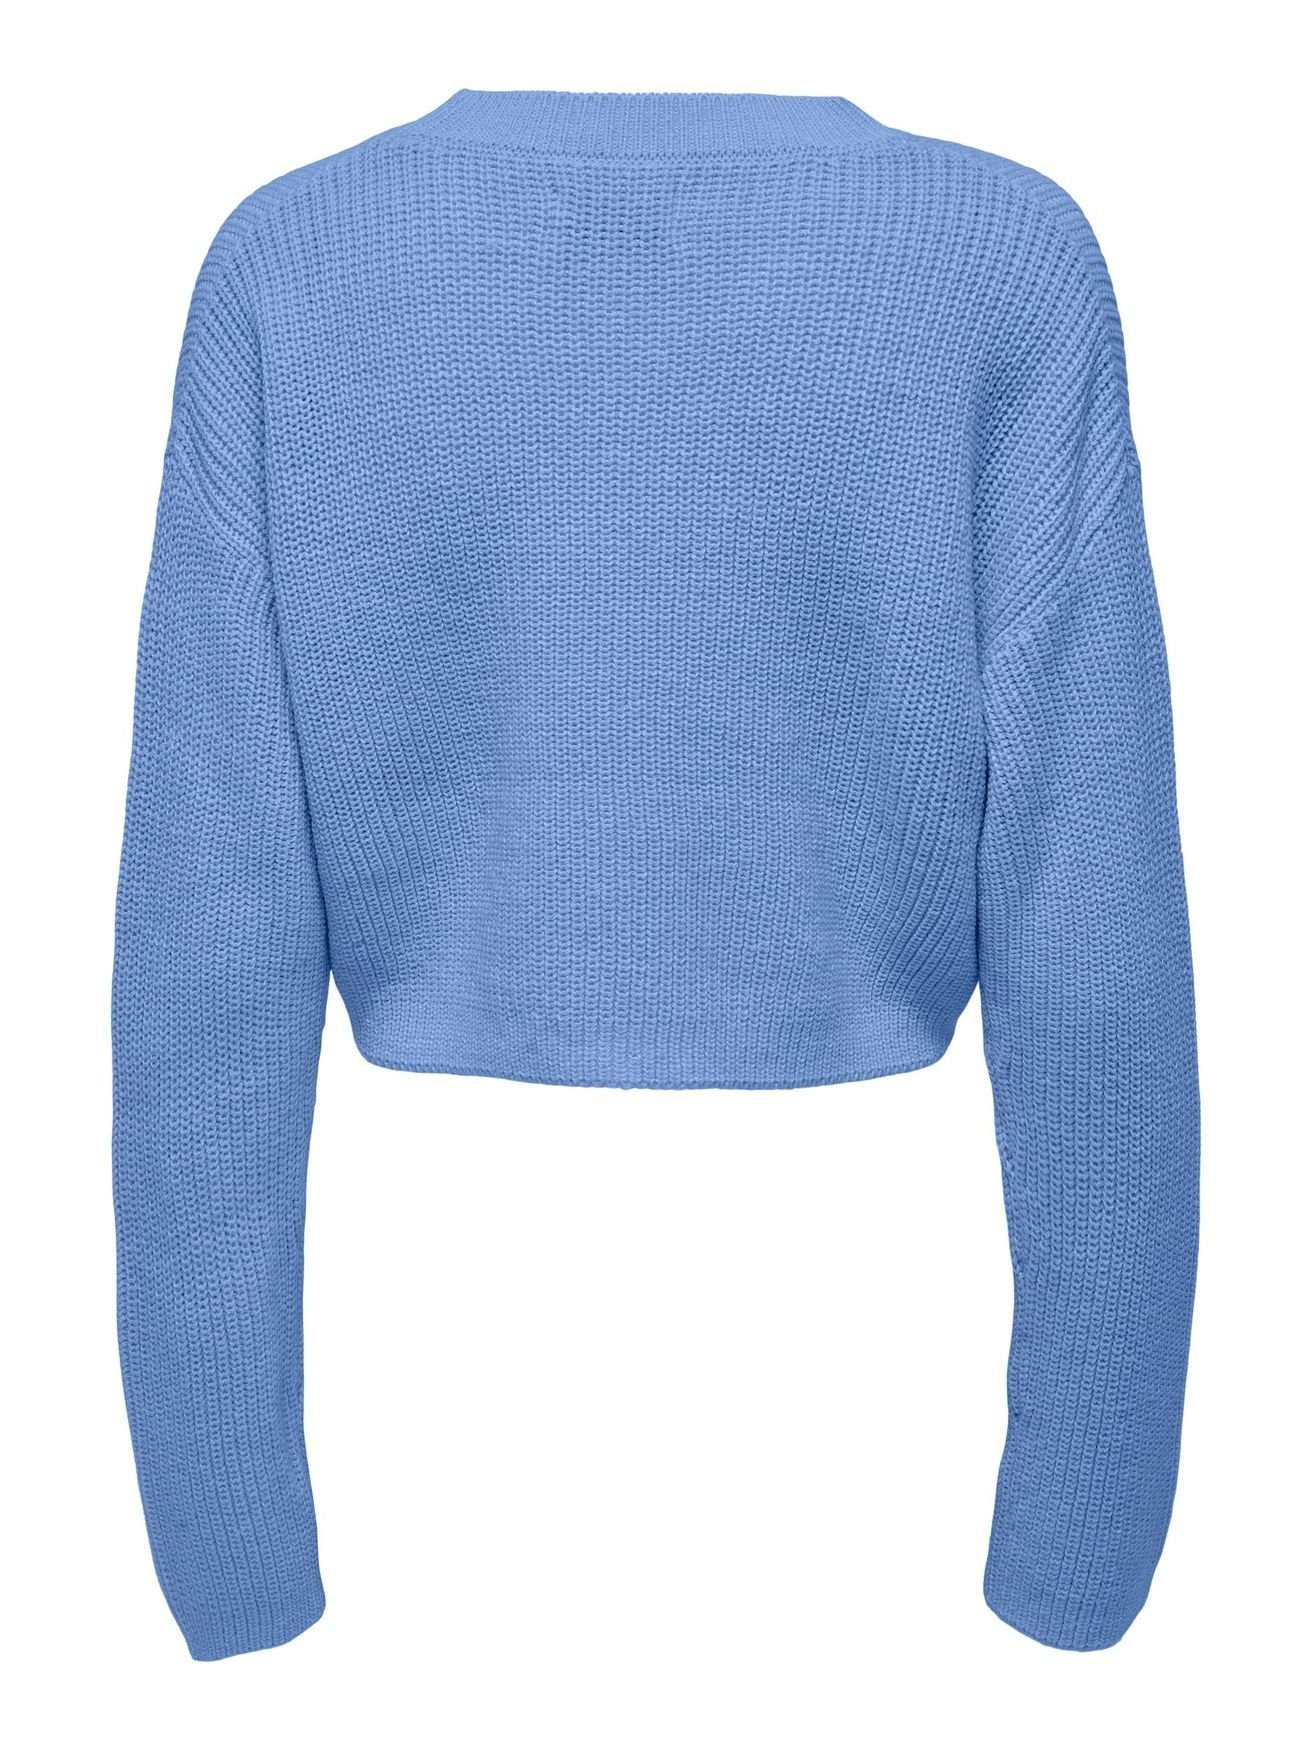 ONLY Strickpullover Cropped 4579 in Pullover Blau Rippstrick Sweater ONLMALAVI Kurzer Langarm